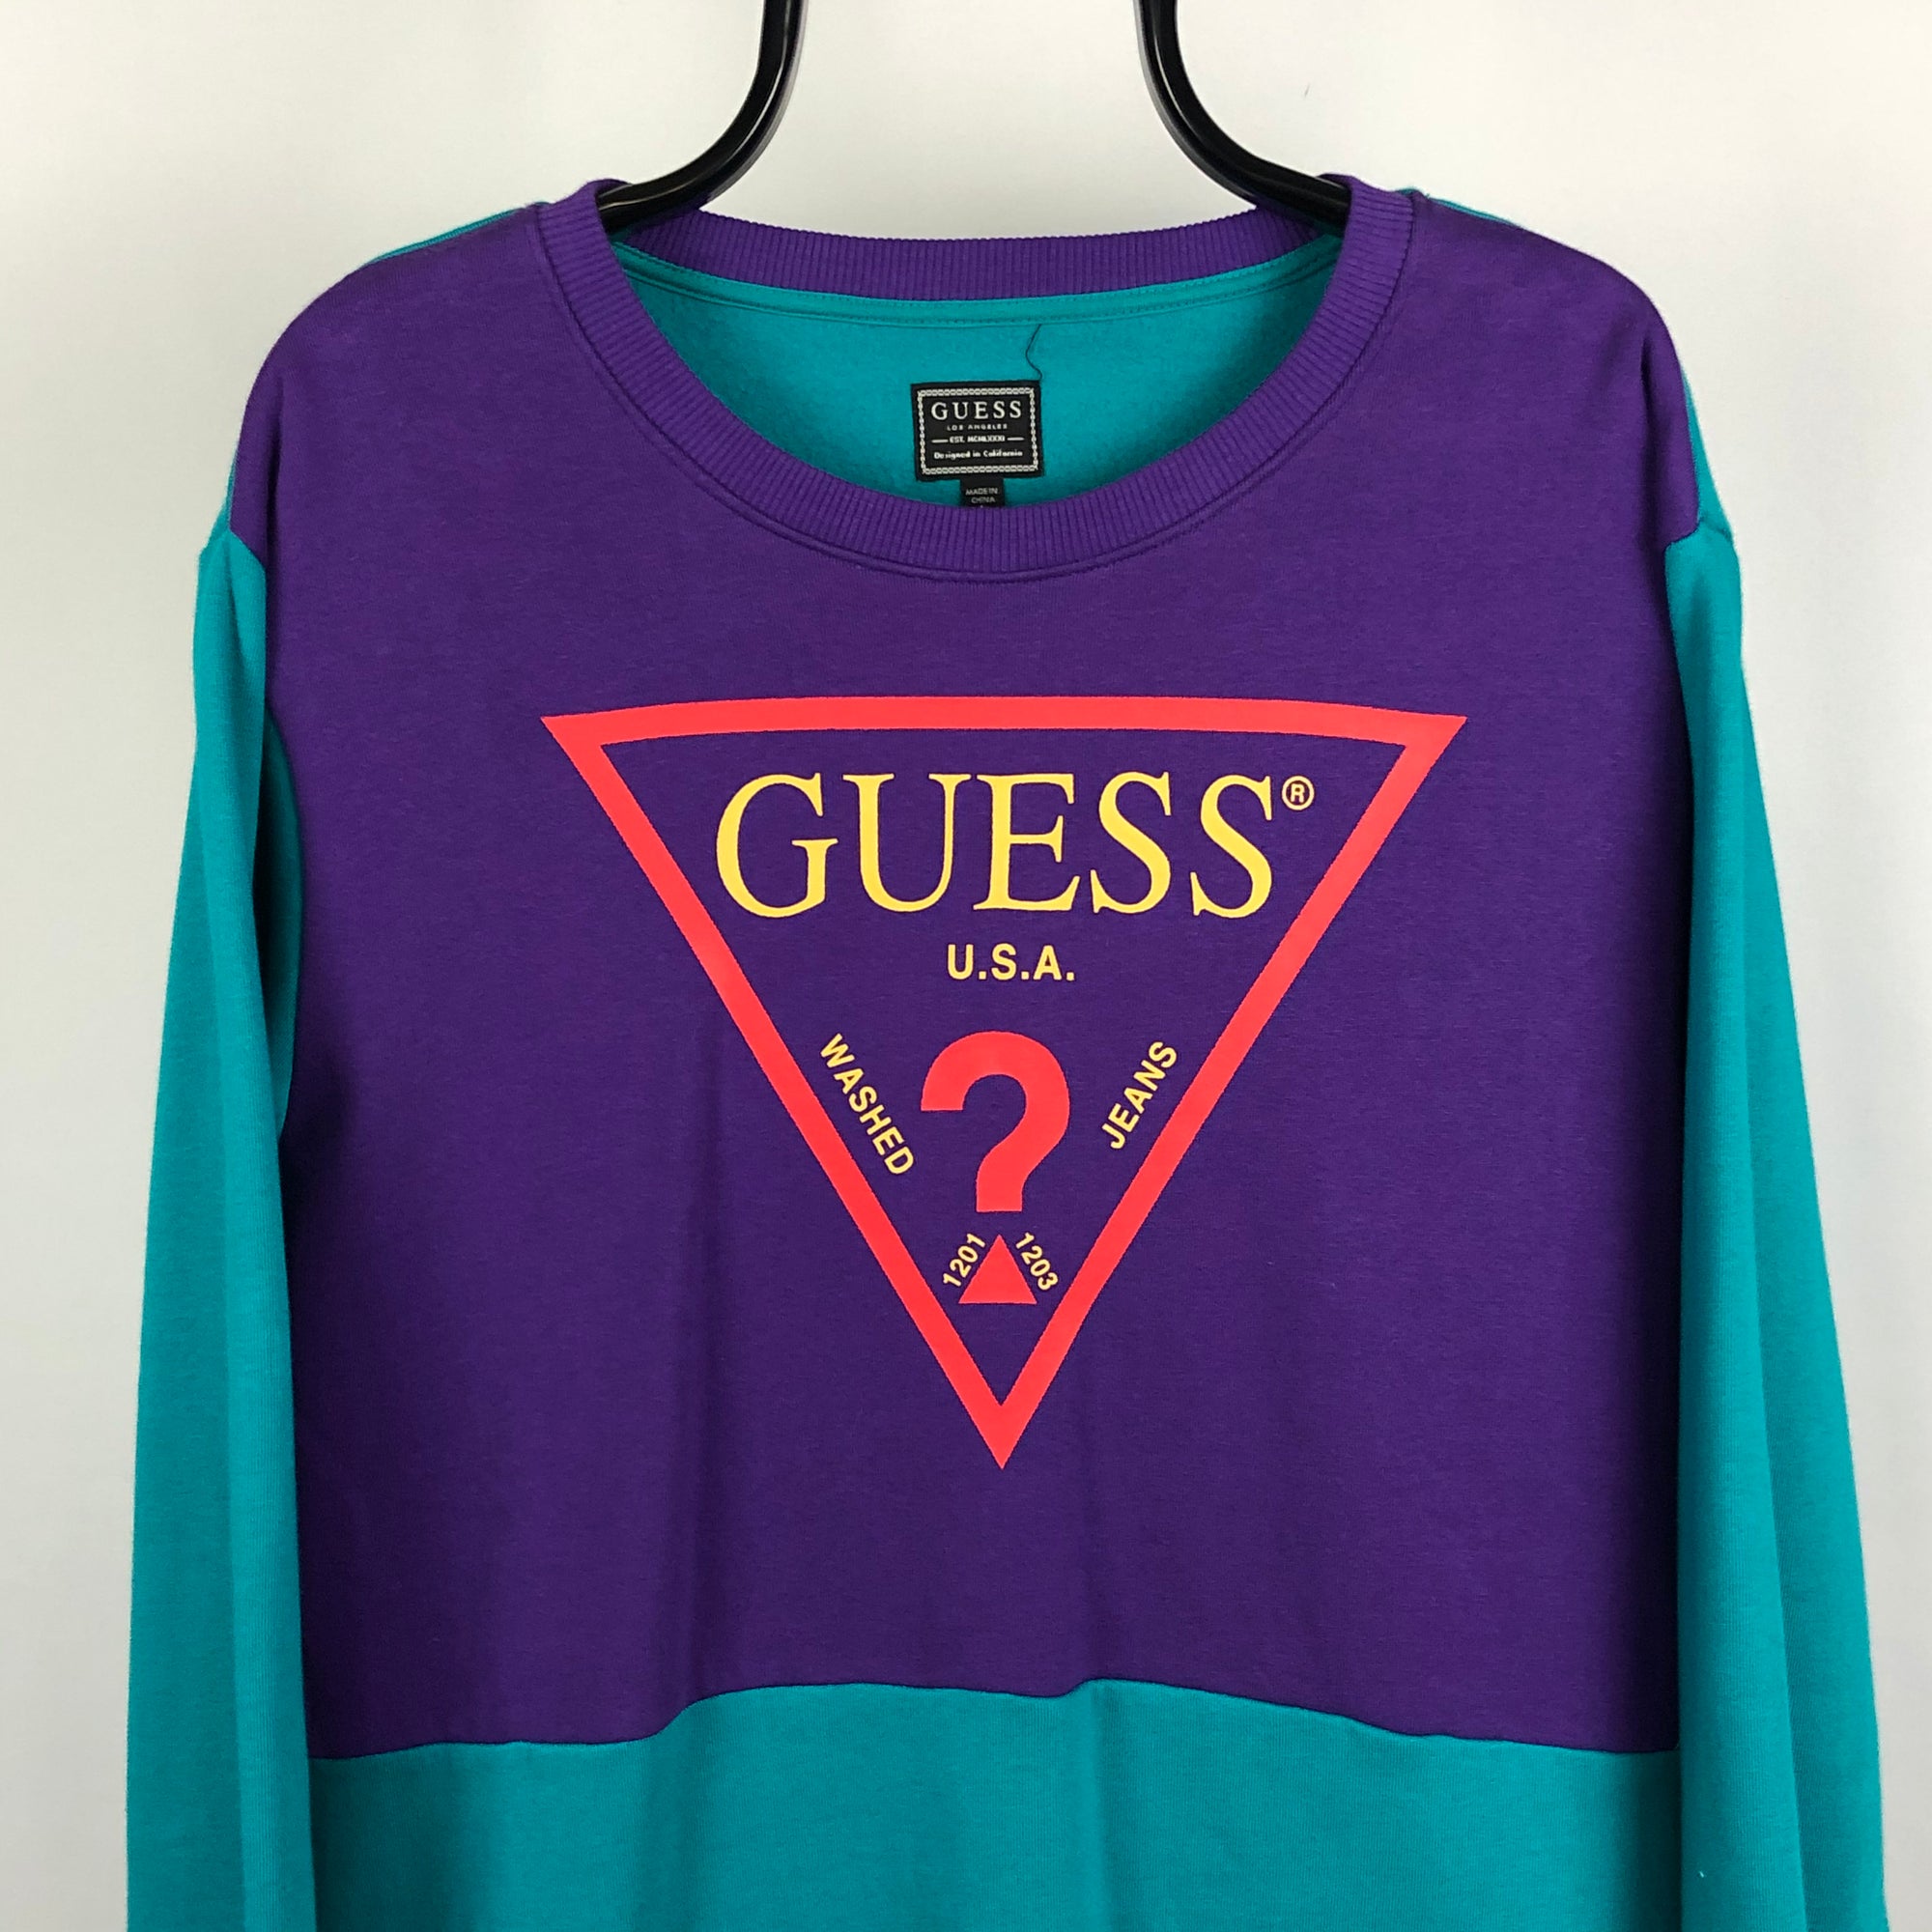 Guess x Pacsun Collab Sweatshirt - Men's Large/Women's XL